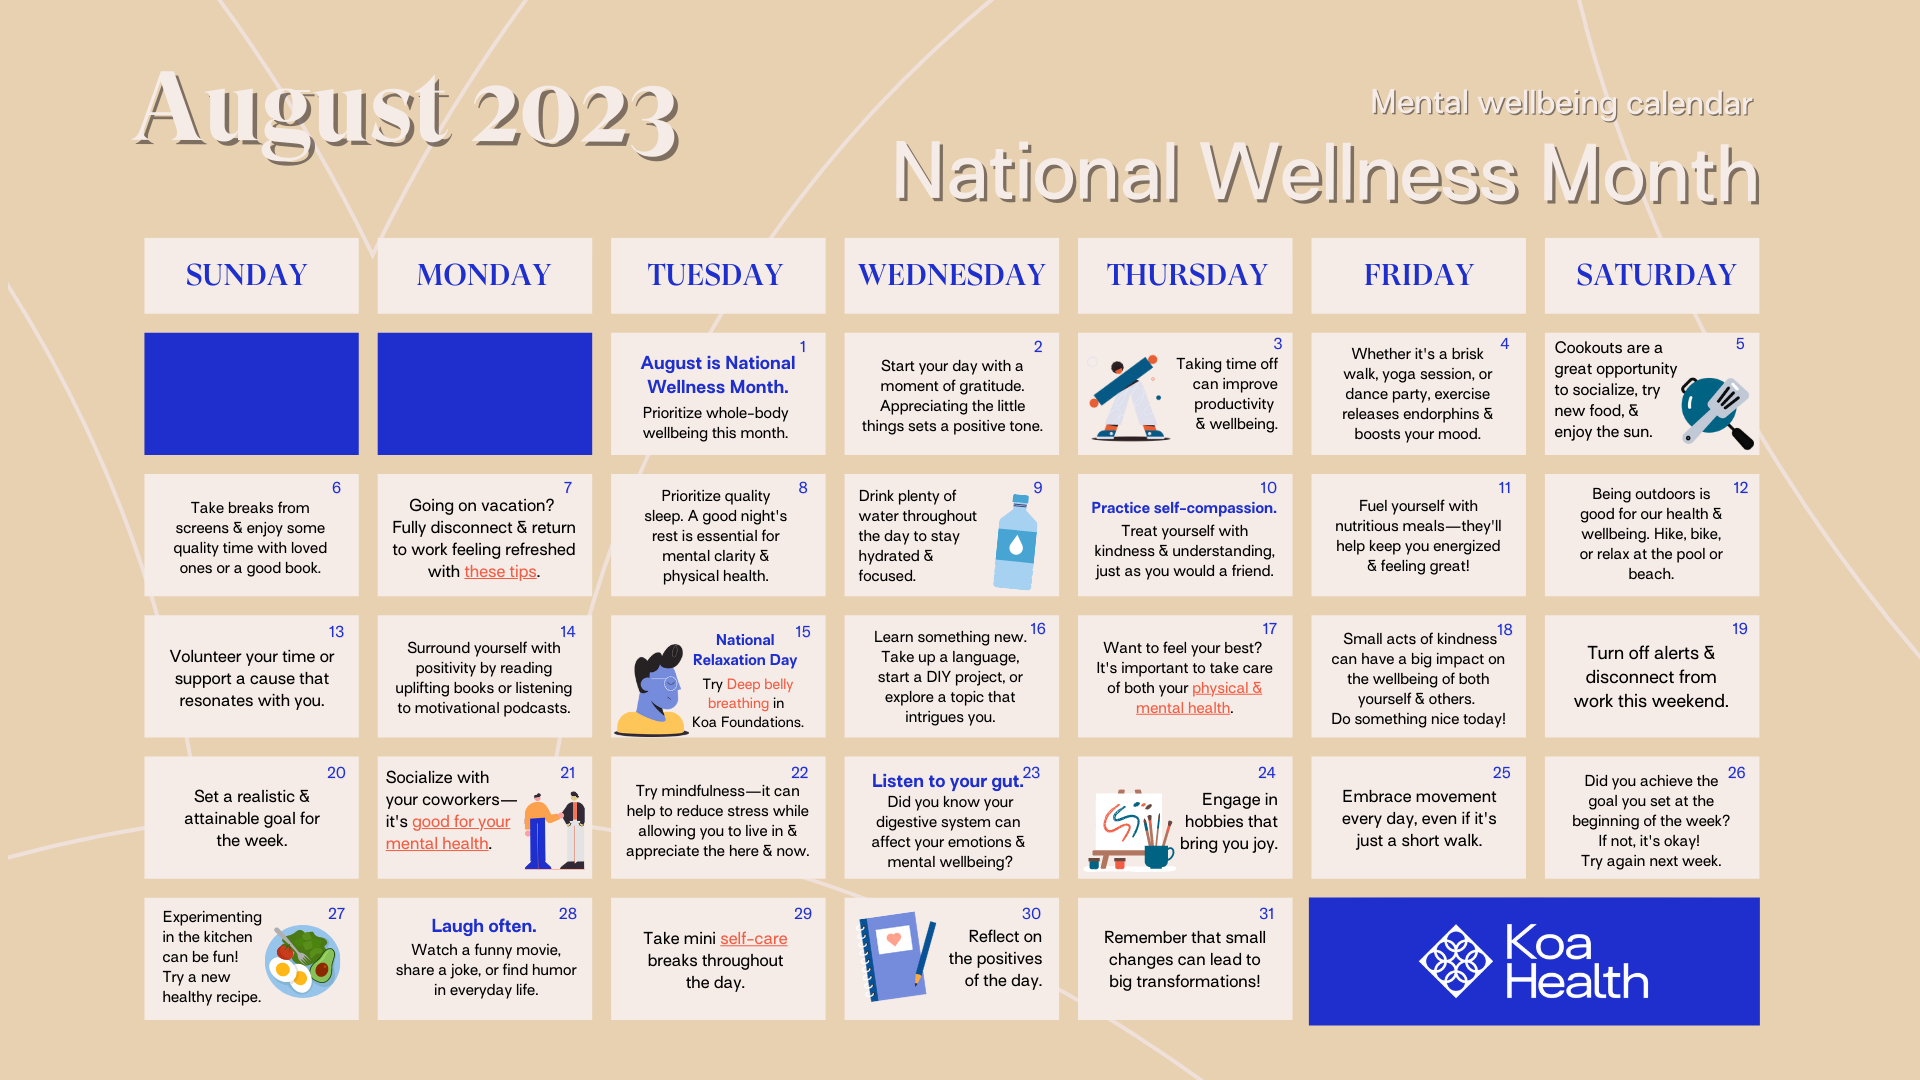 Mental wellbeing calendar August 2023